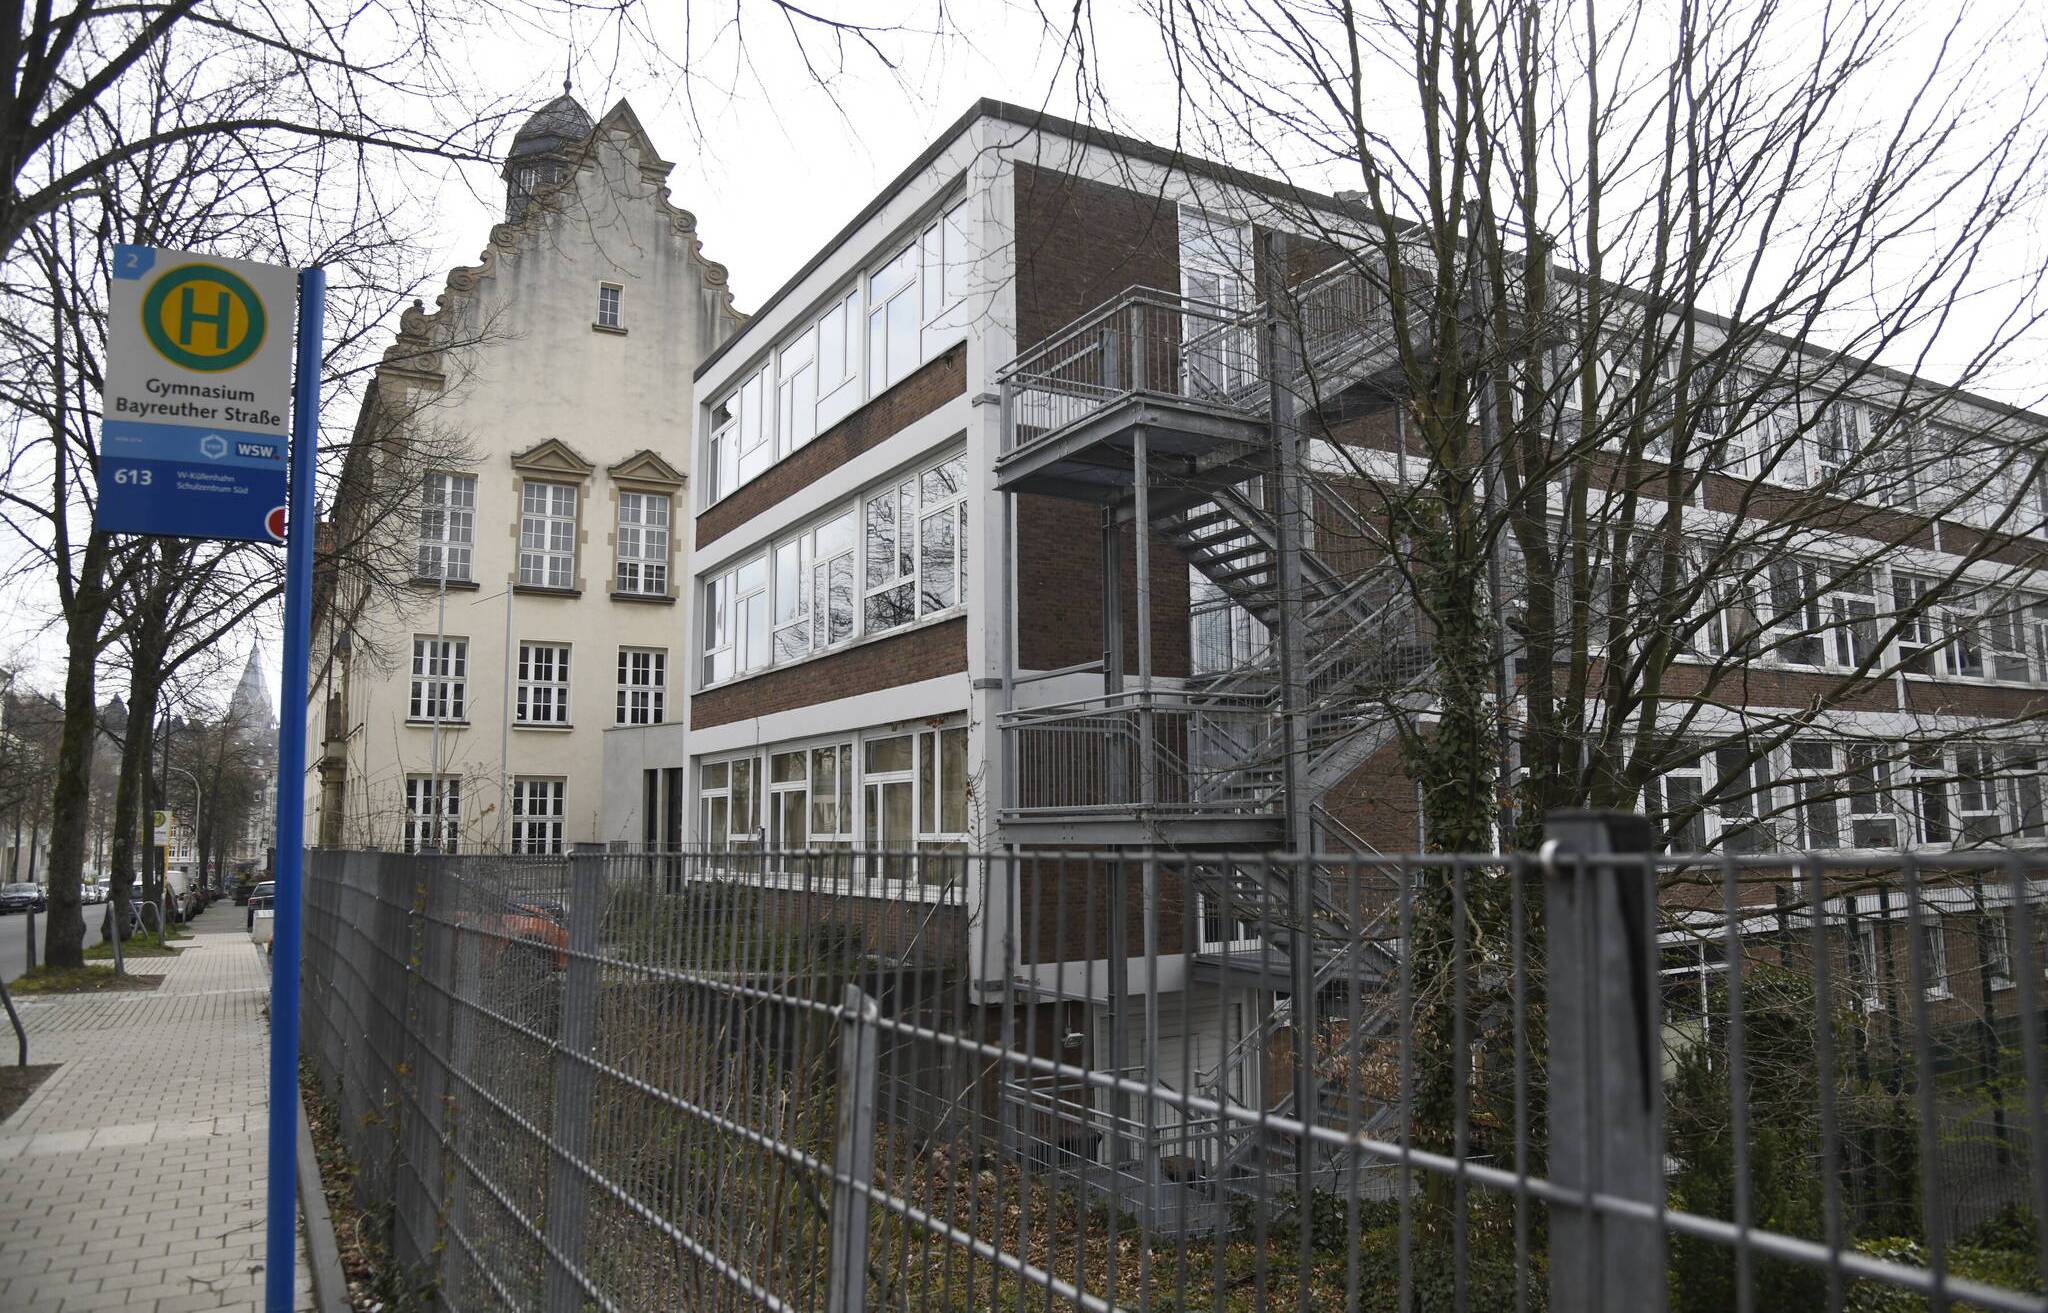 Gymnasium Bayreuther Straße: Umbau wohl teuer